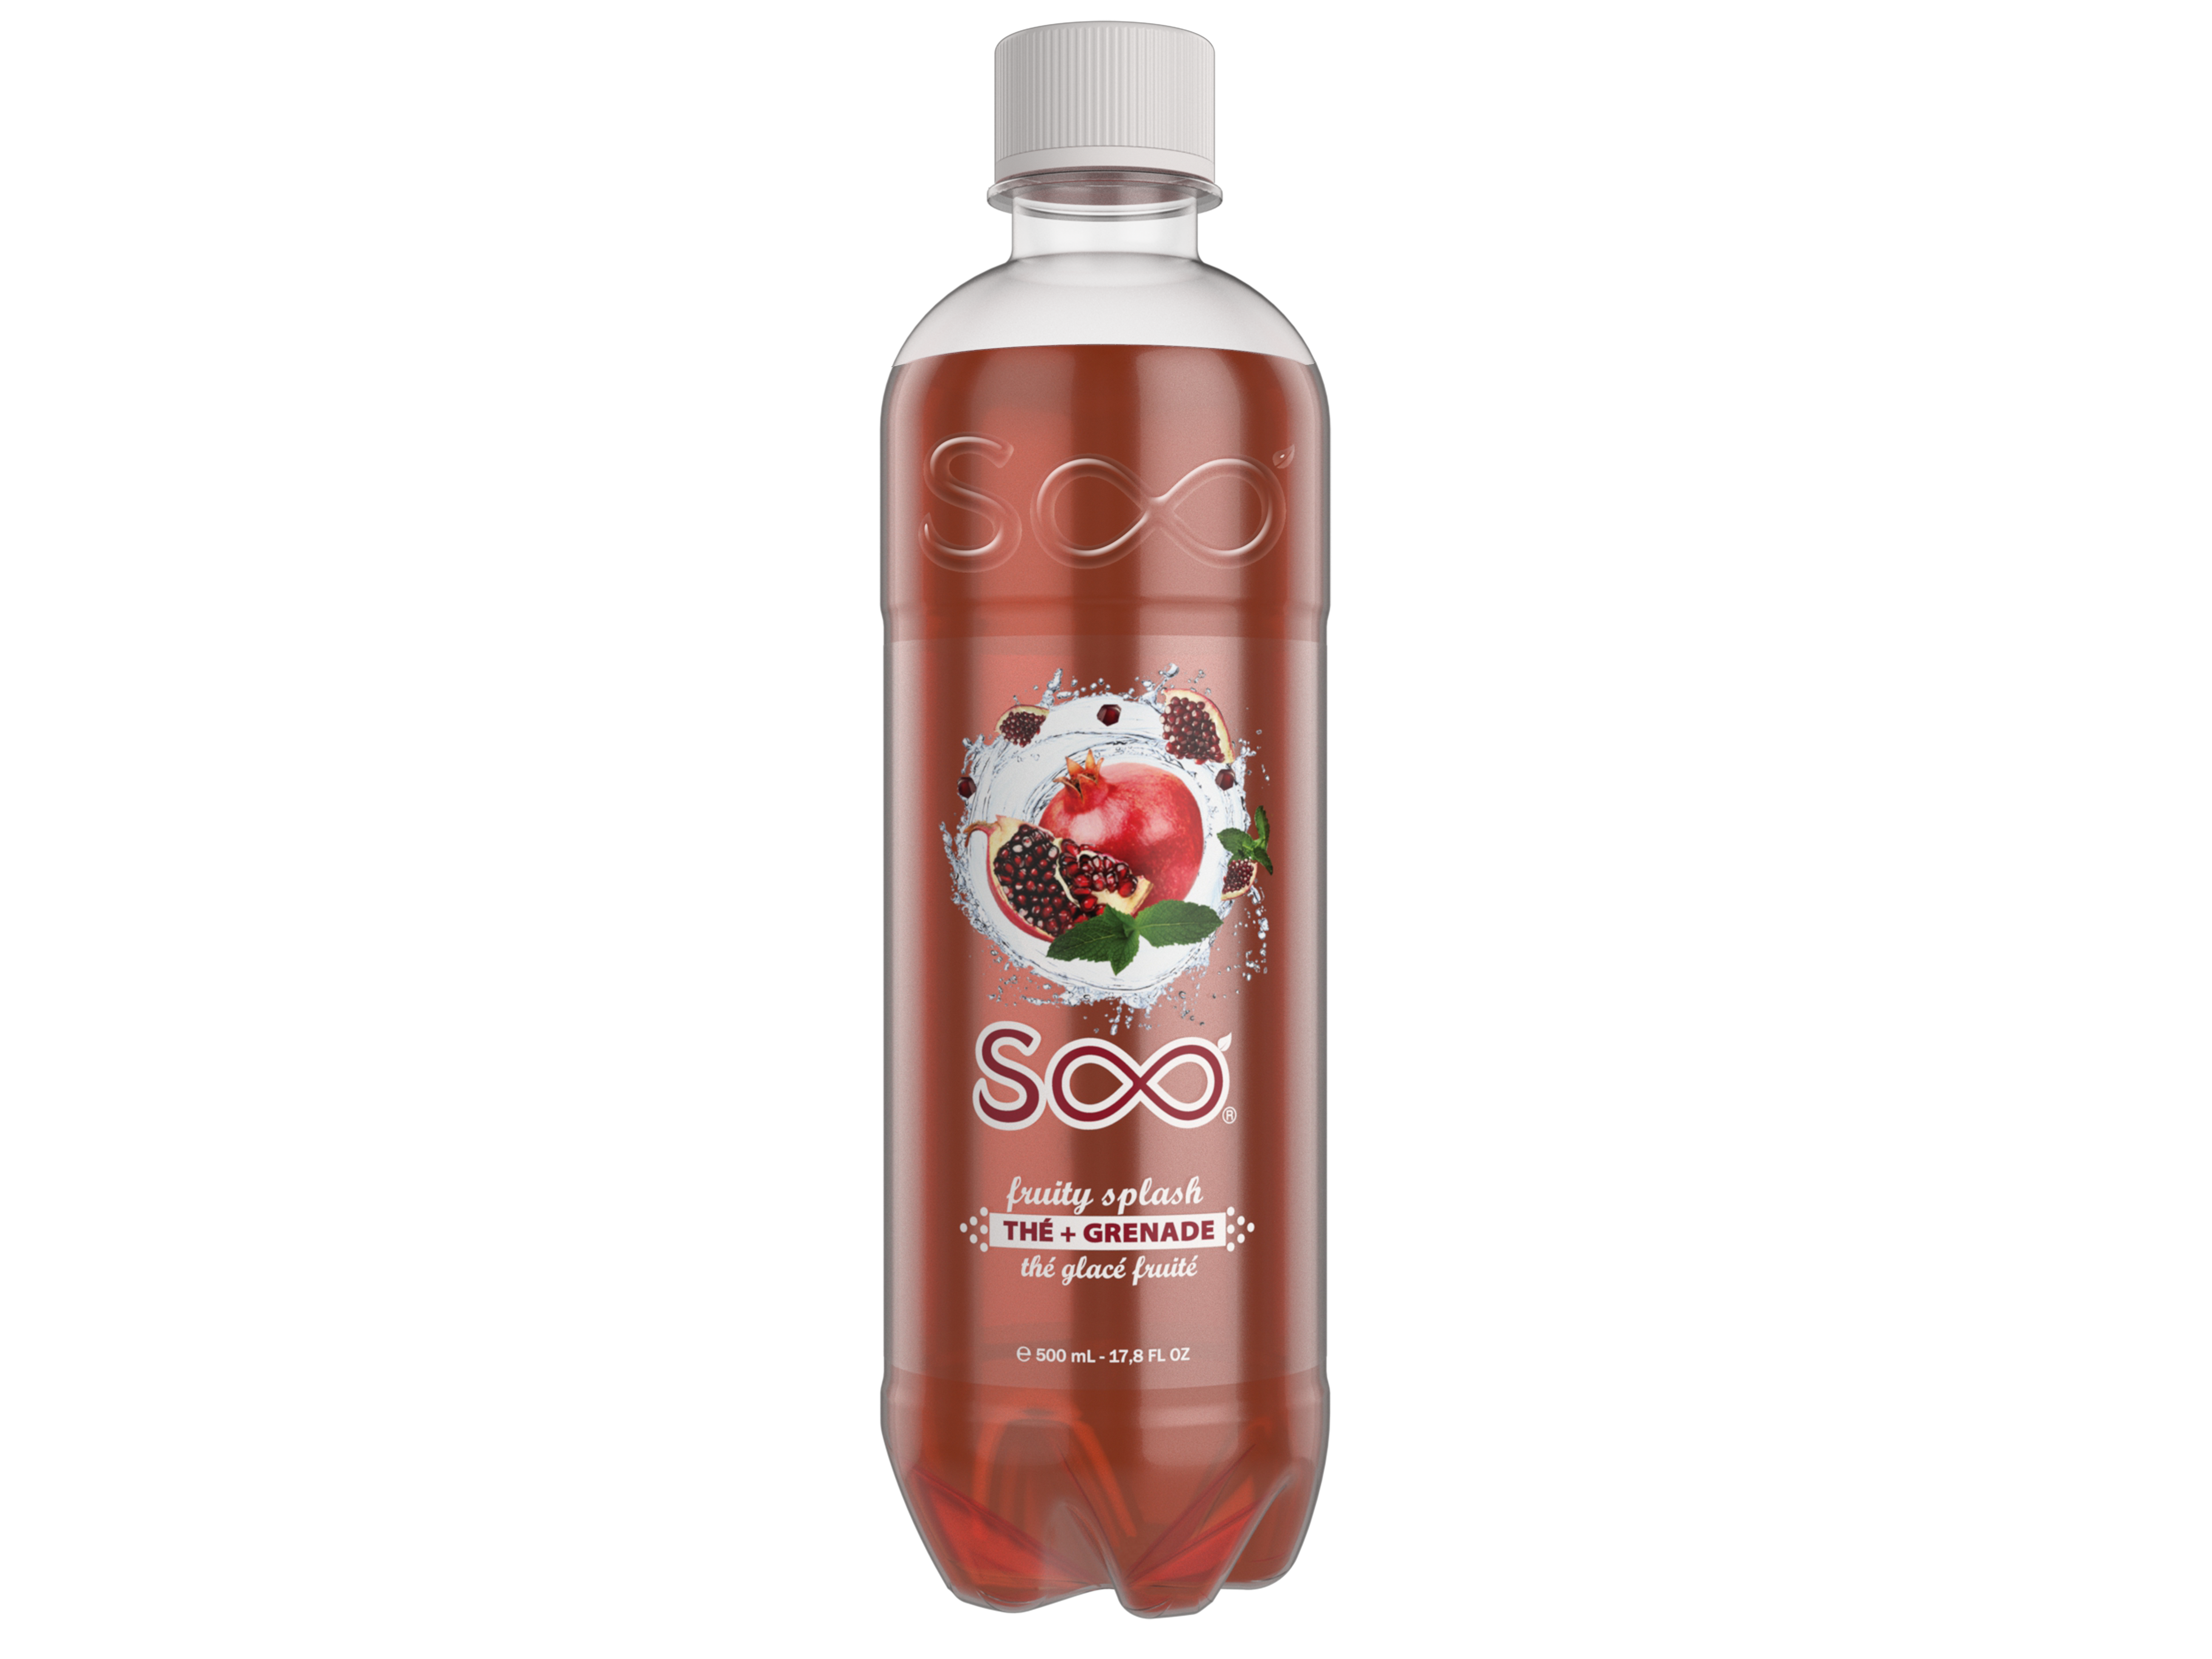 Soo fruity splash pomegranate. Juice clipart refreshments